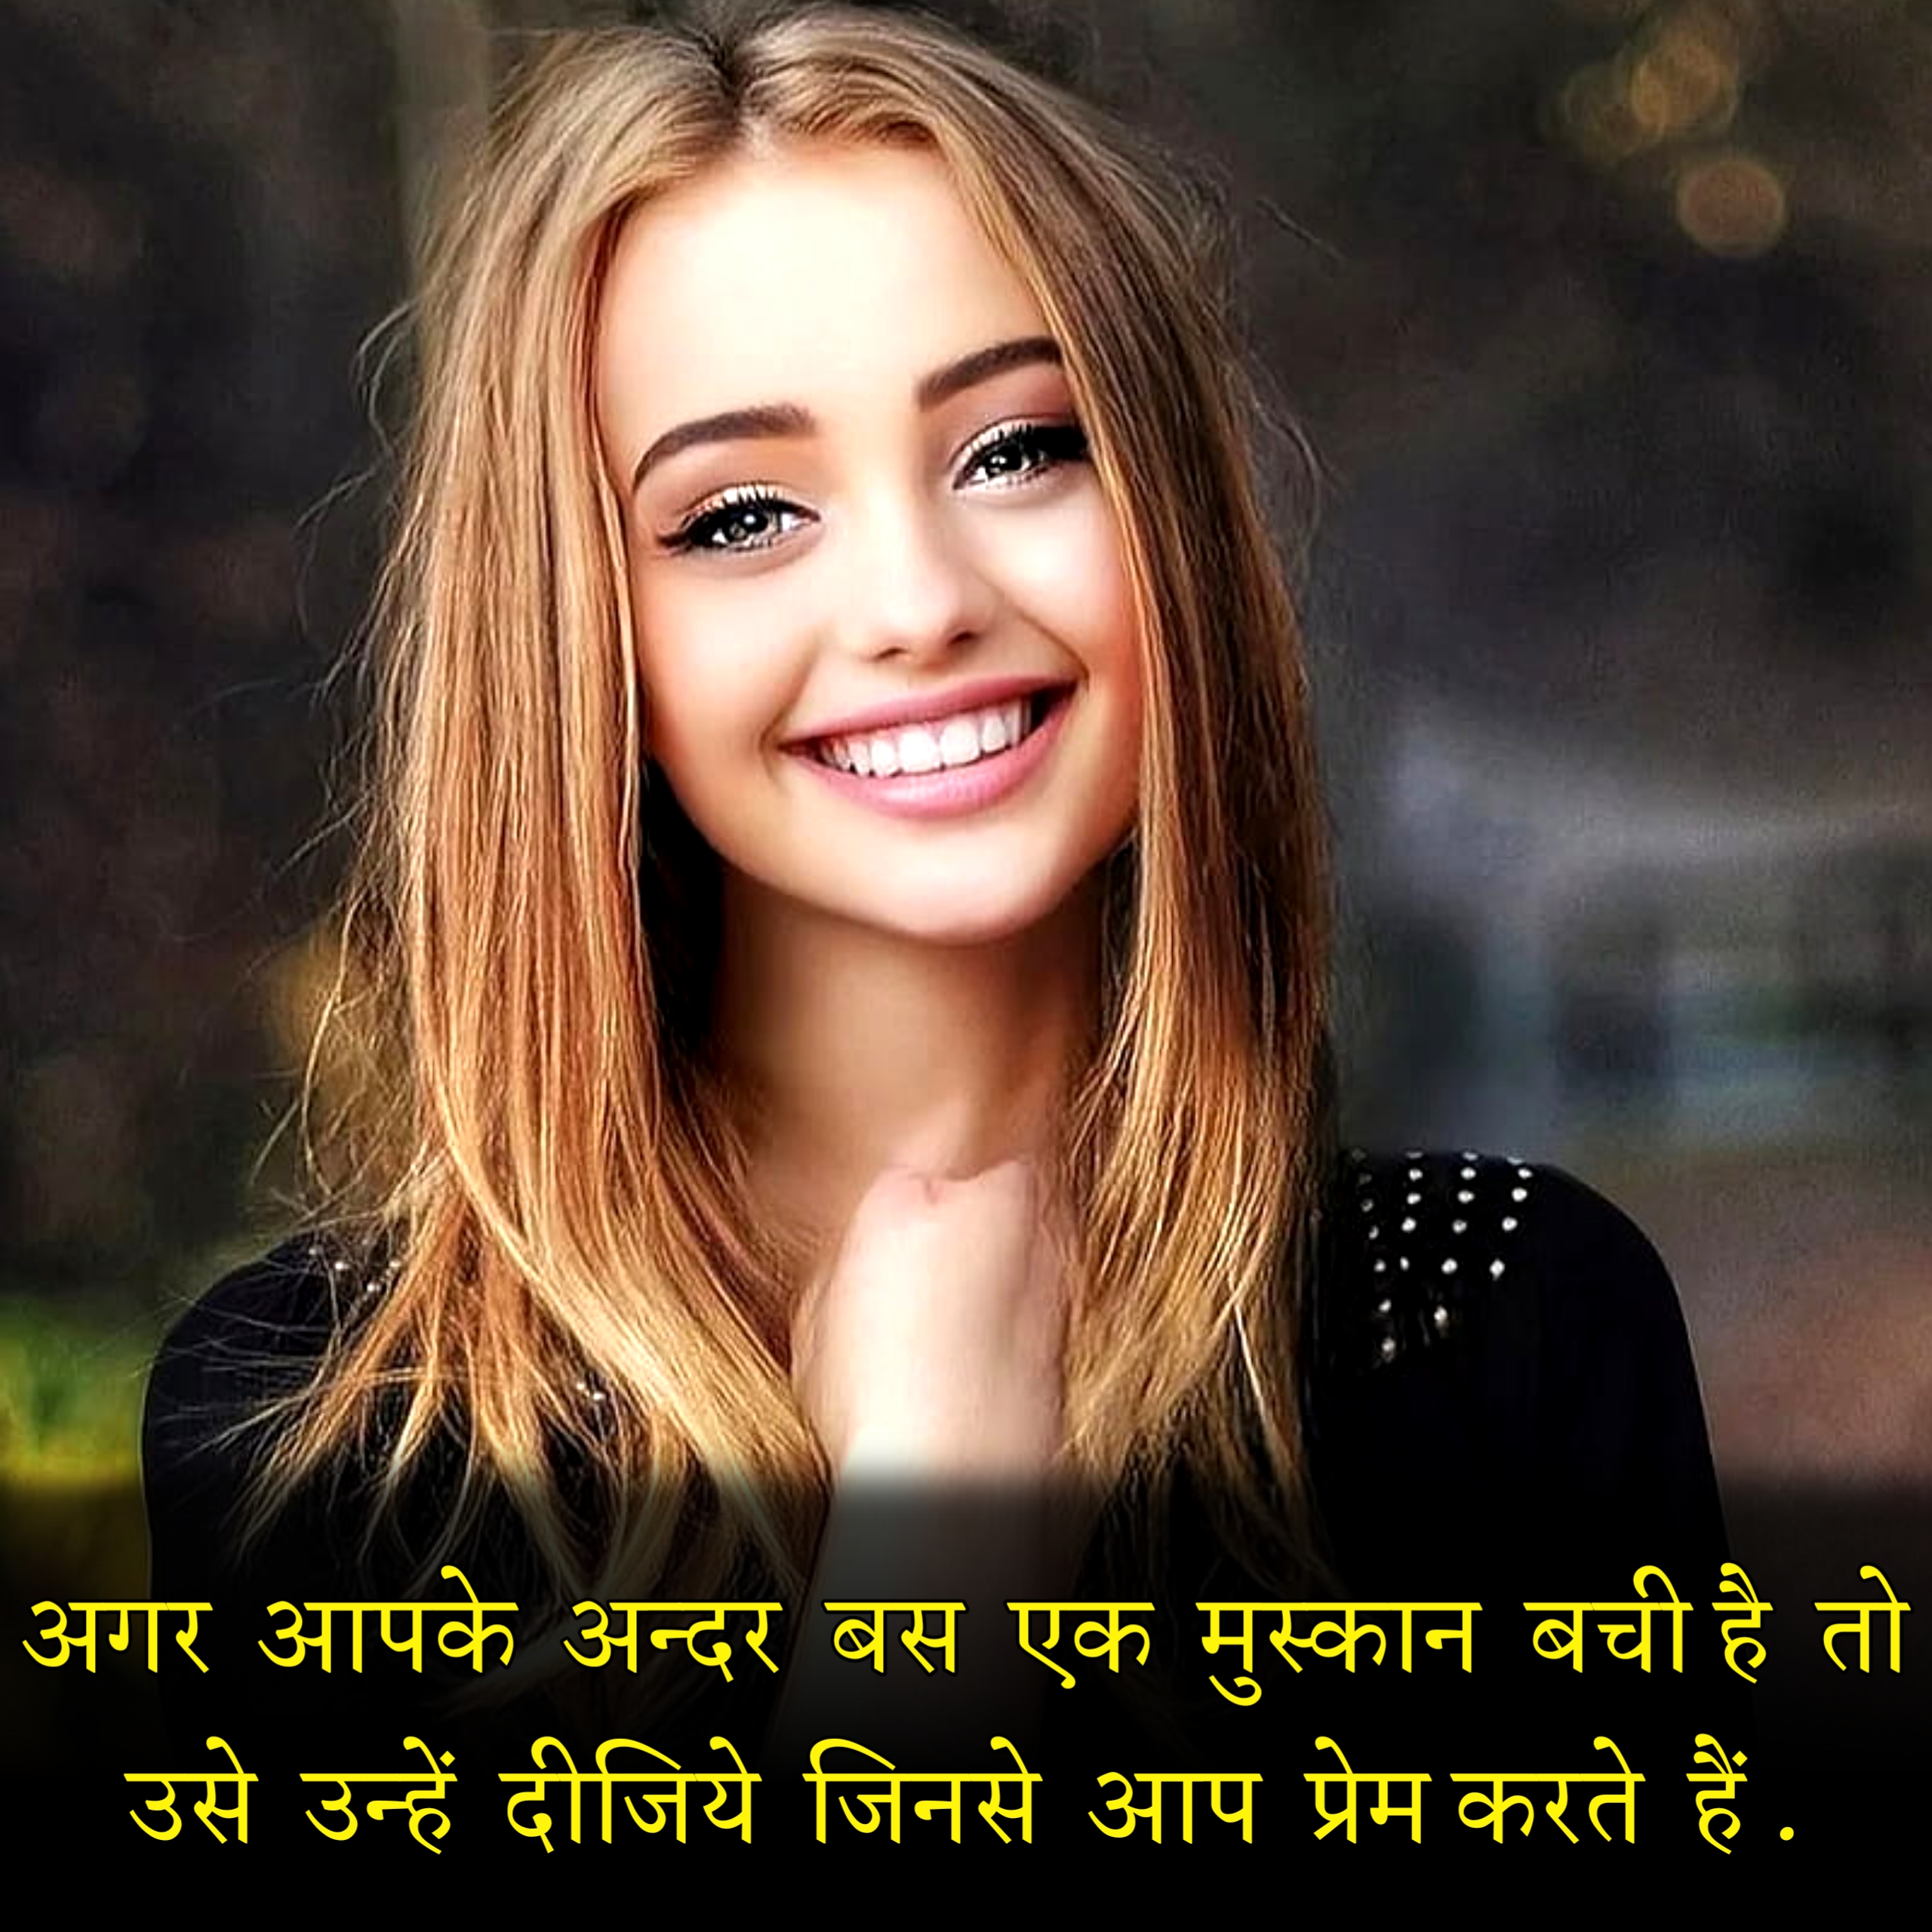 Smile quotes in Hindi 2023 | स्माइल कोट्स इन हिंदी,smile quotes in hindi with images,smile quotes in hindi shayari,fake smile quotes ,fake smile quotes in hindi